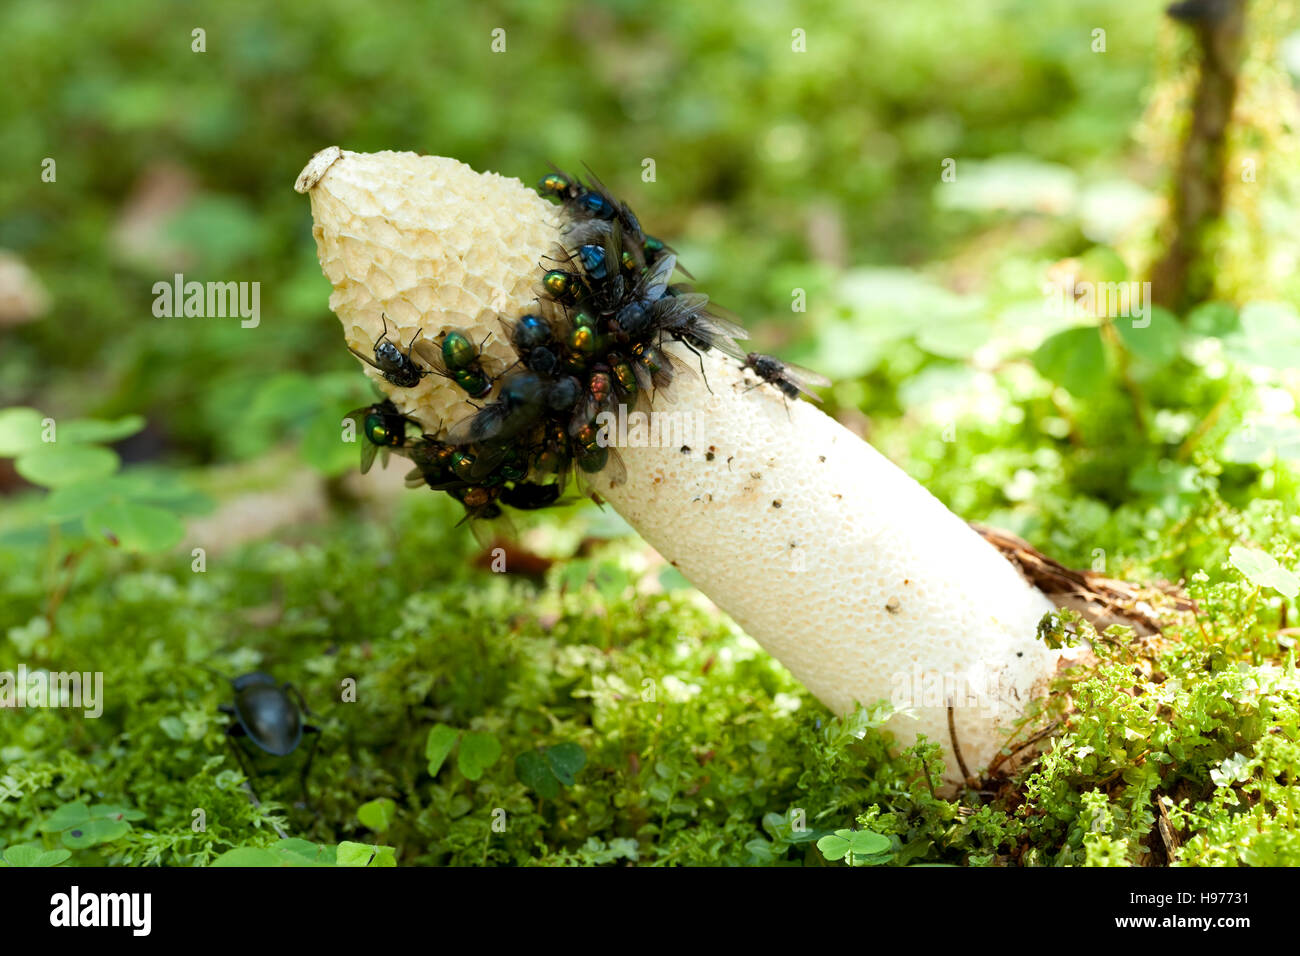 white stinkhorn (Phallus impudicus) on blurred background Stock Photo